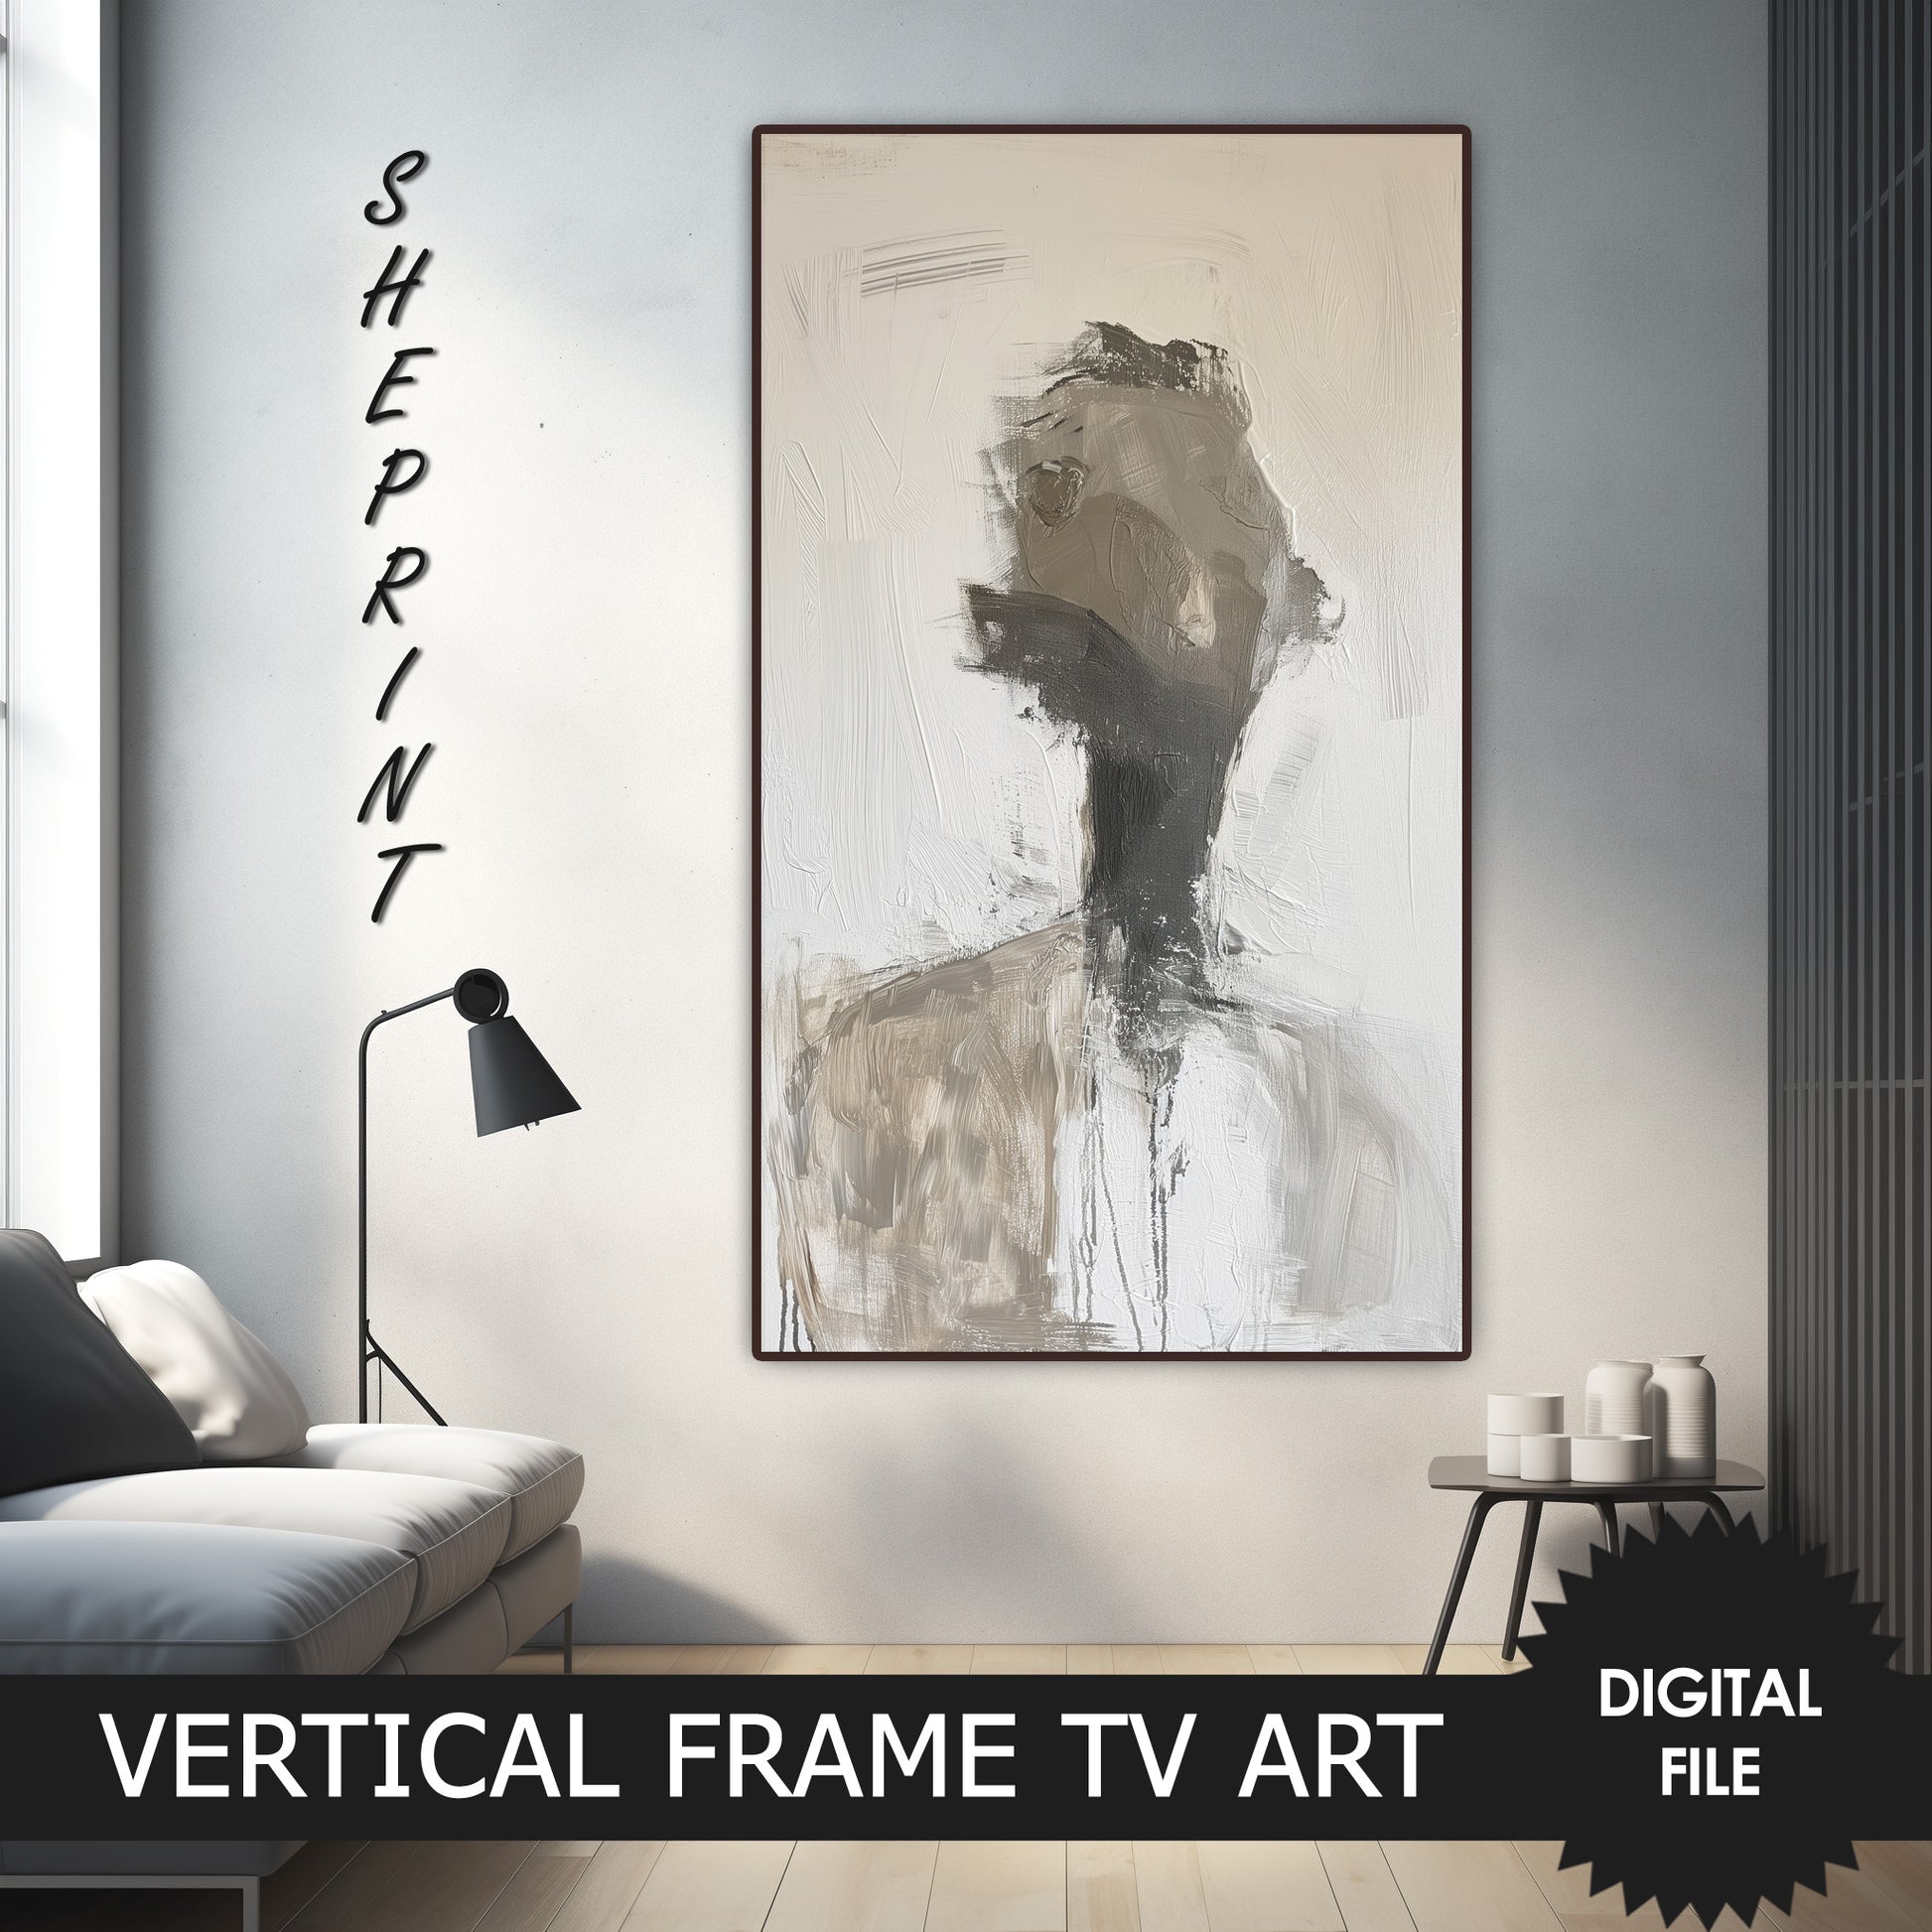 Vertical Frame TV Art, Man Abstract Art, Oil Painting, Digital TV Art preview on Samsung Frame TV when mounted vertically